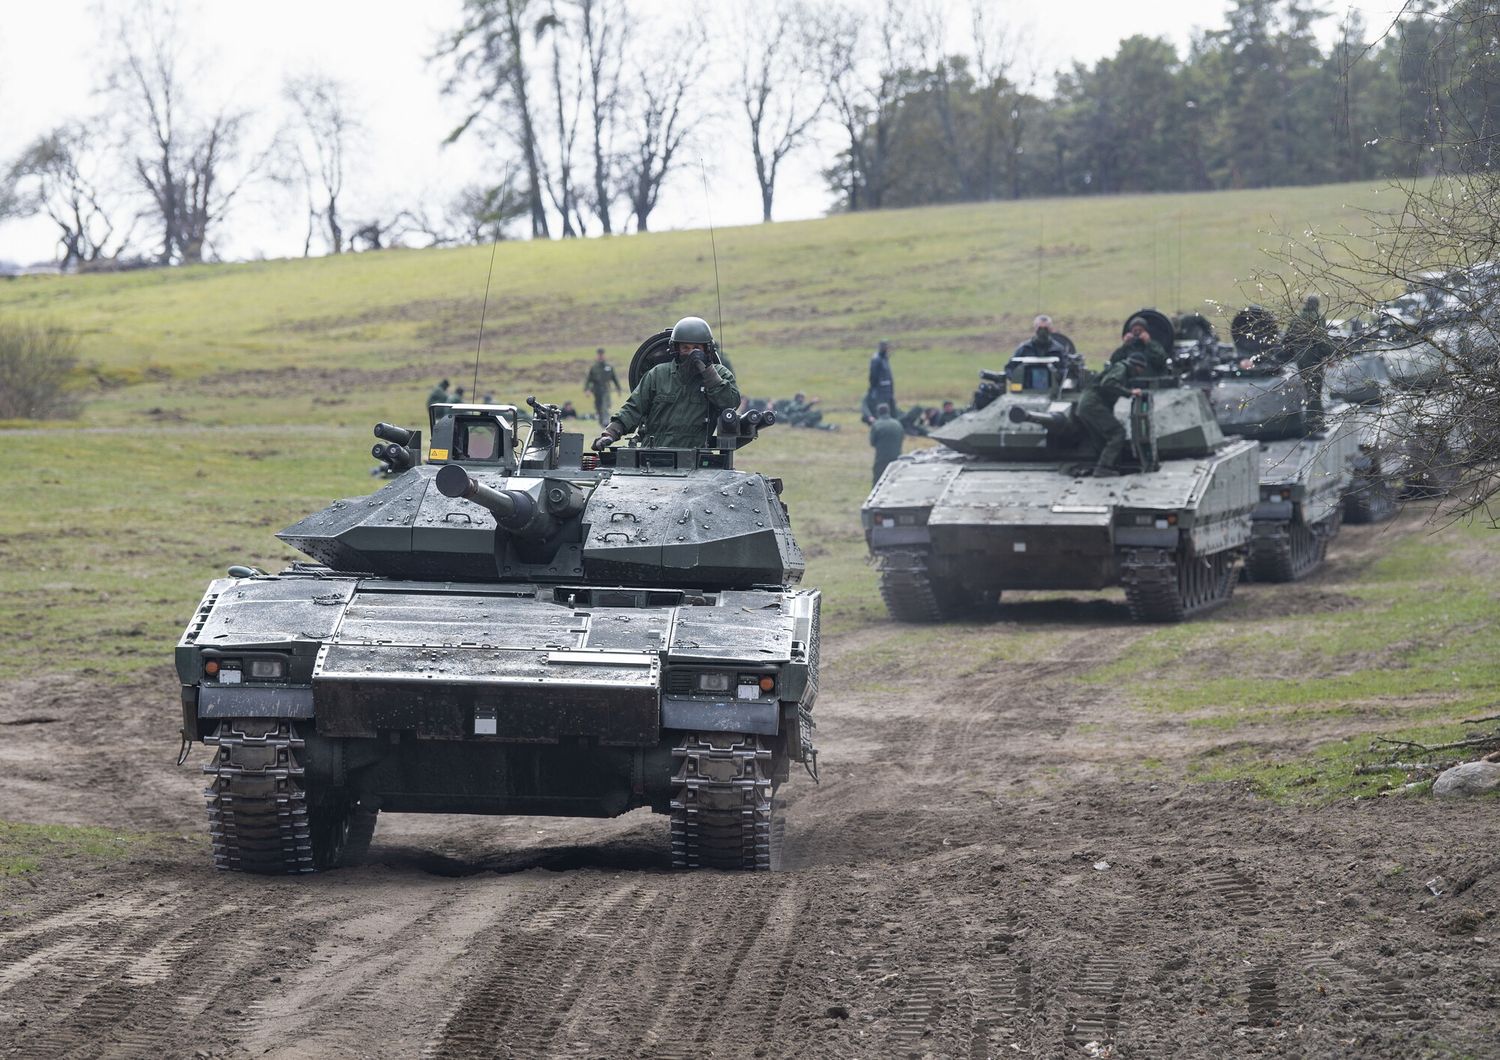 Militari ucraini in addestramento in Svezia